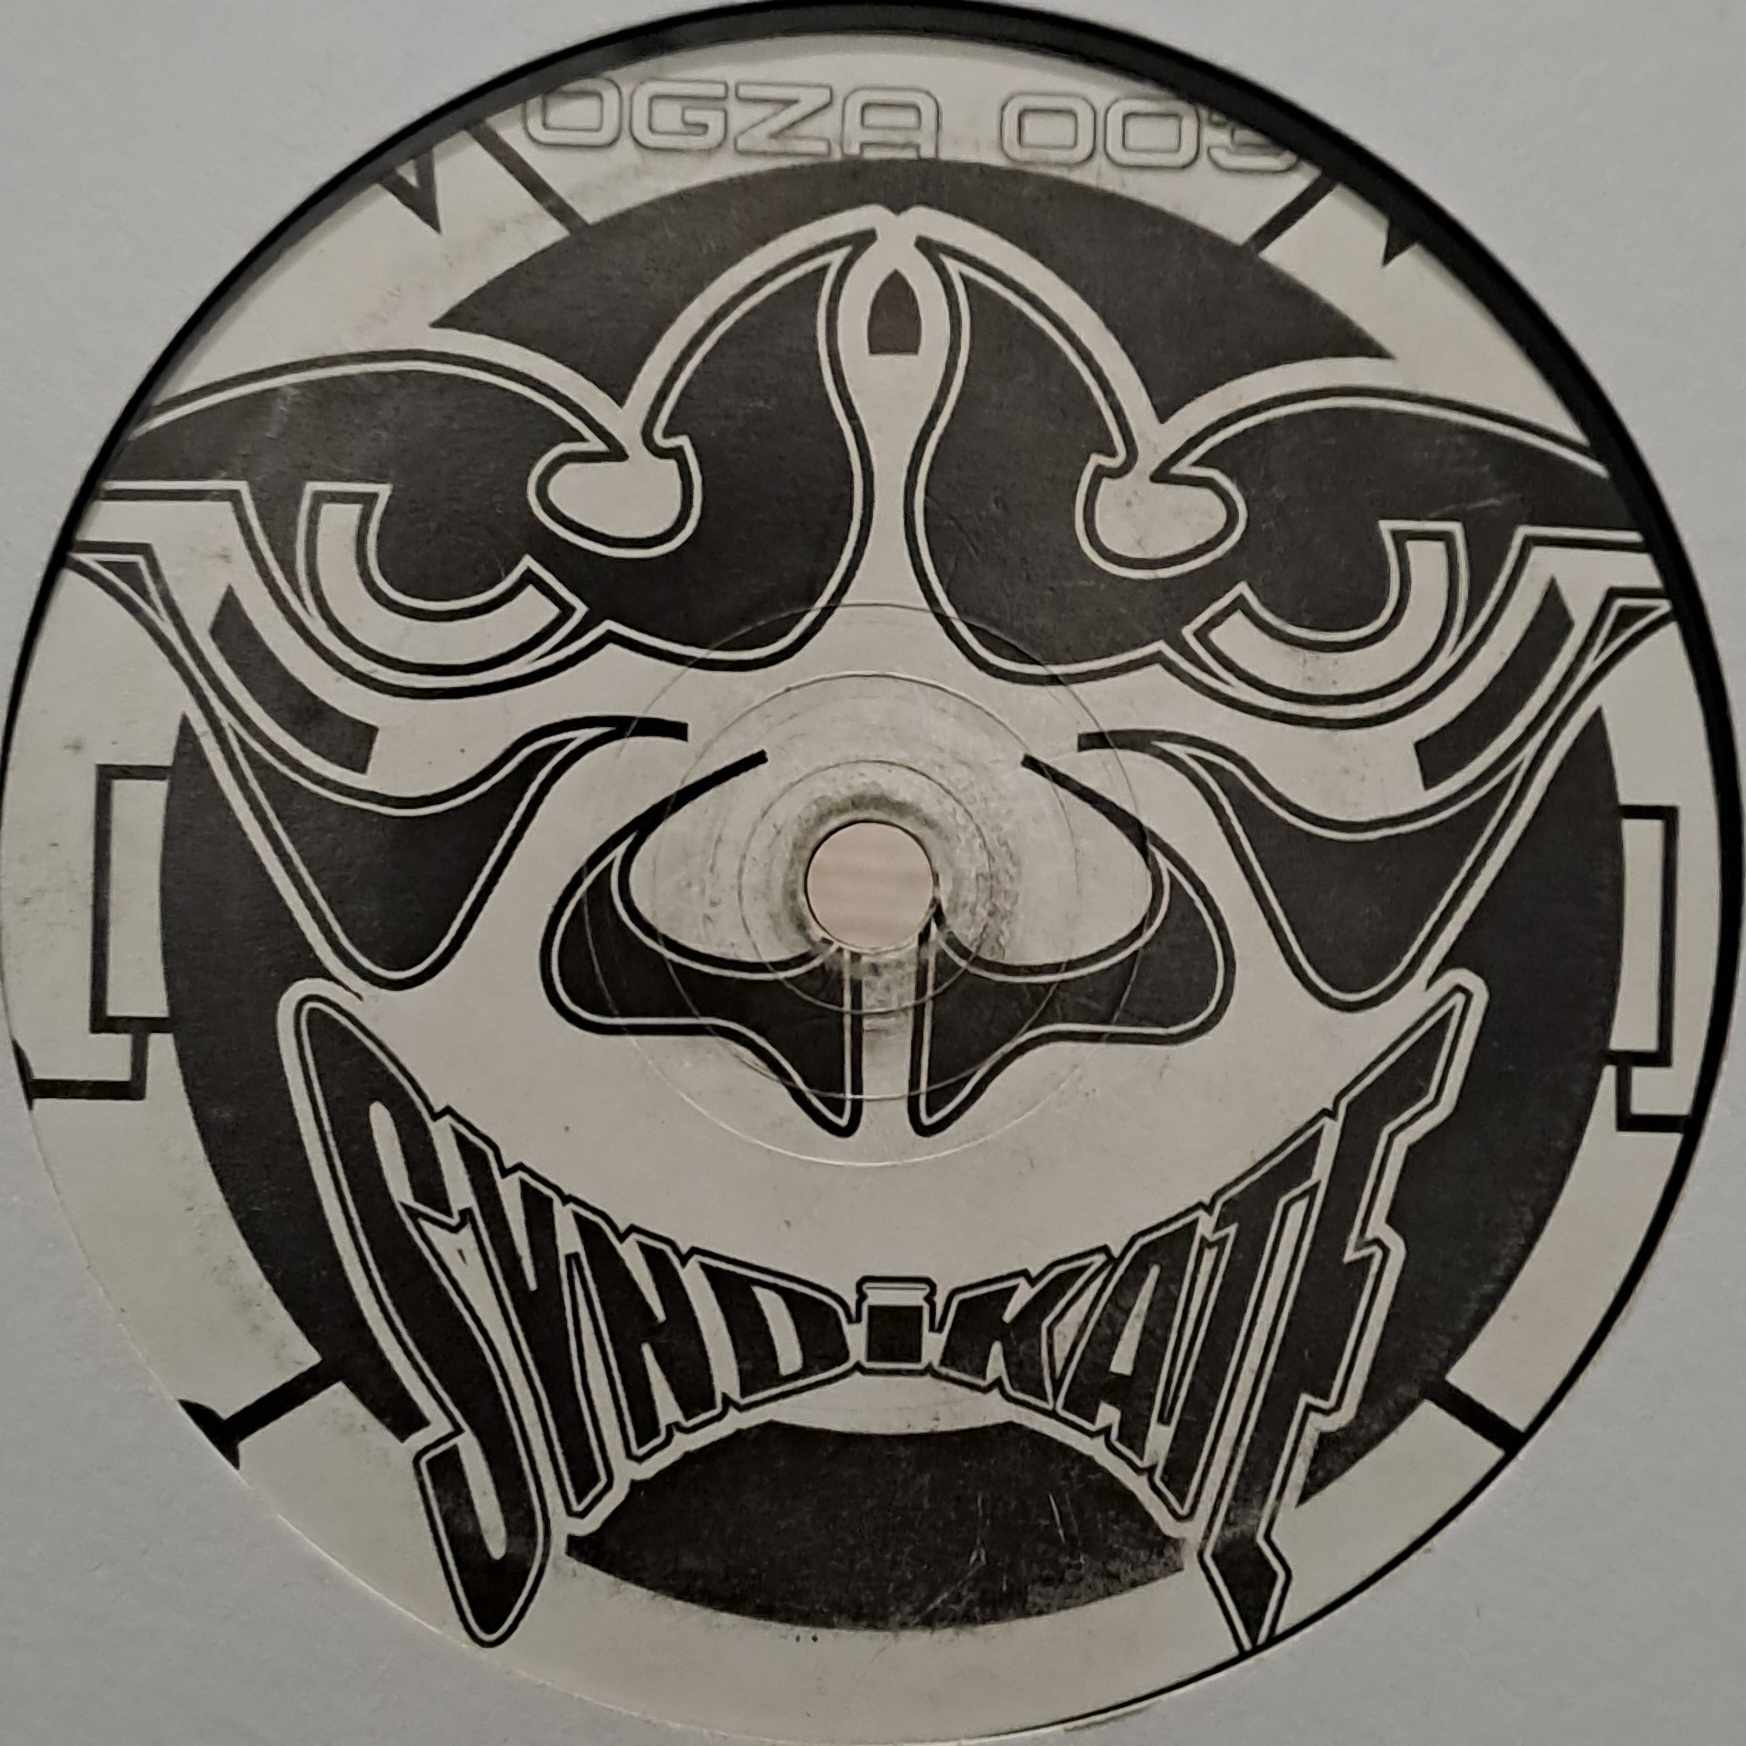 Ogza 03 - vinyle freetekno